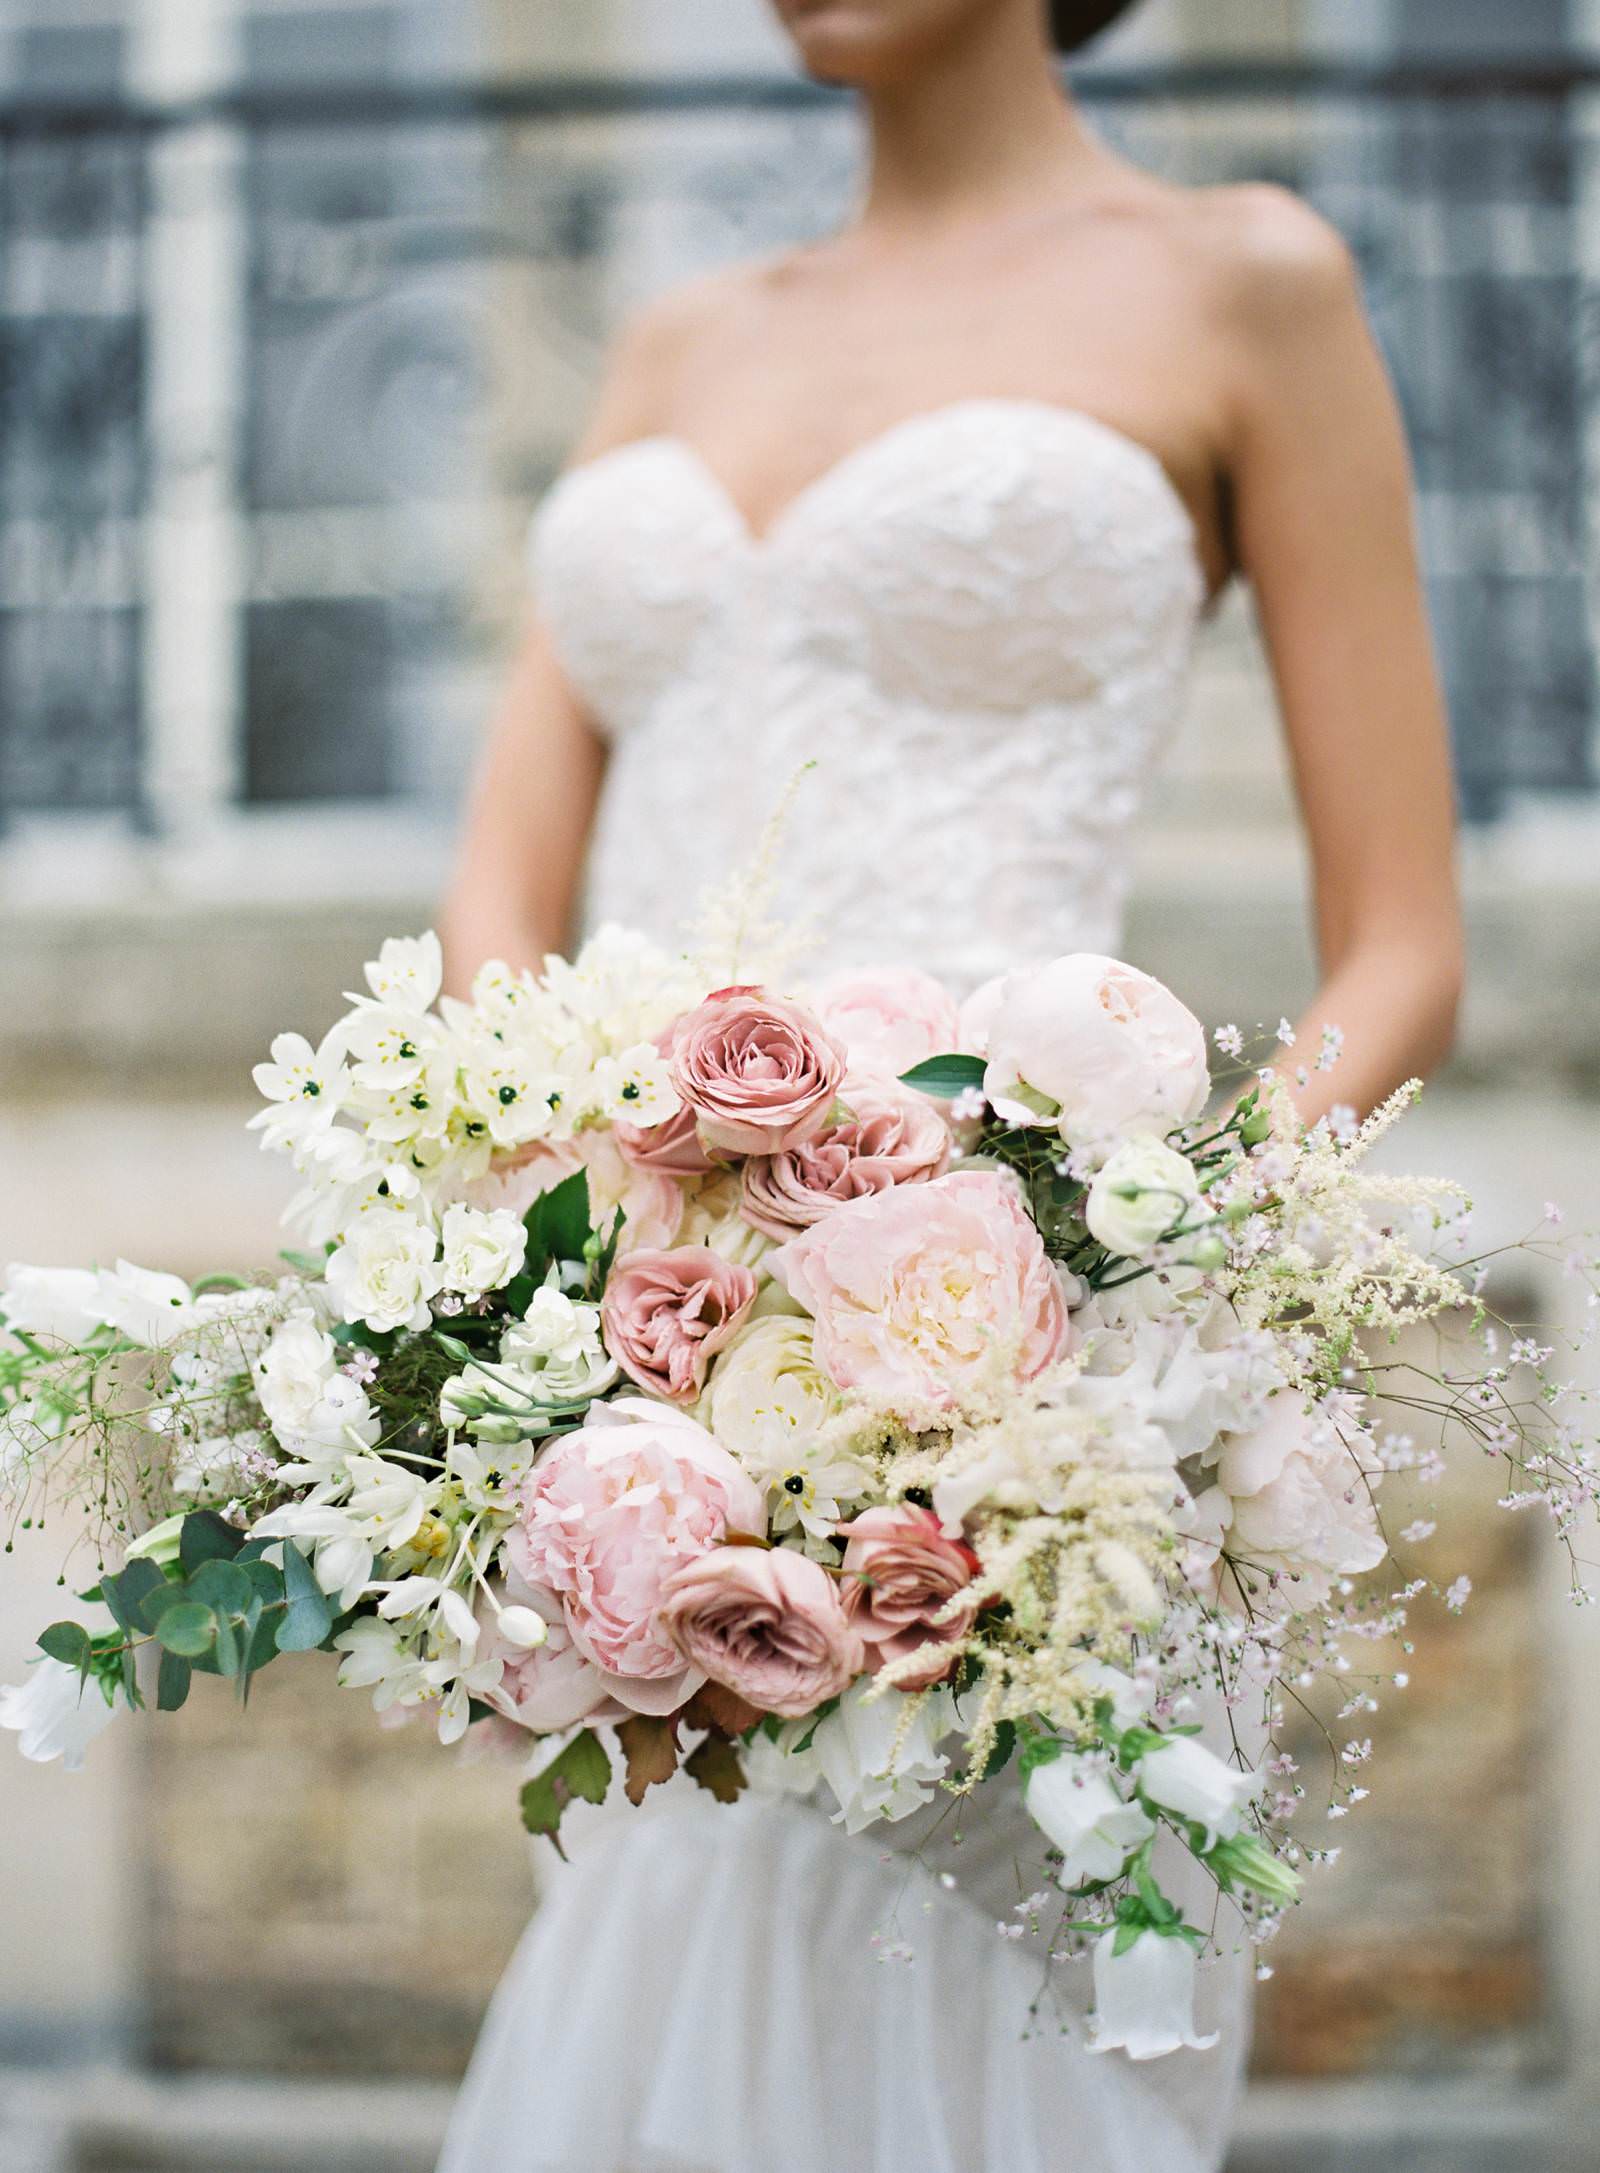 Paris wedding flowers- hemingway bridal bouquet